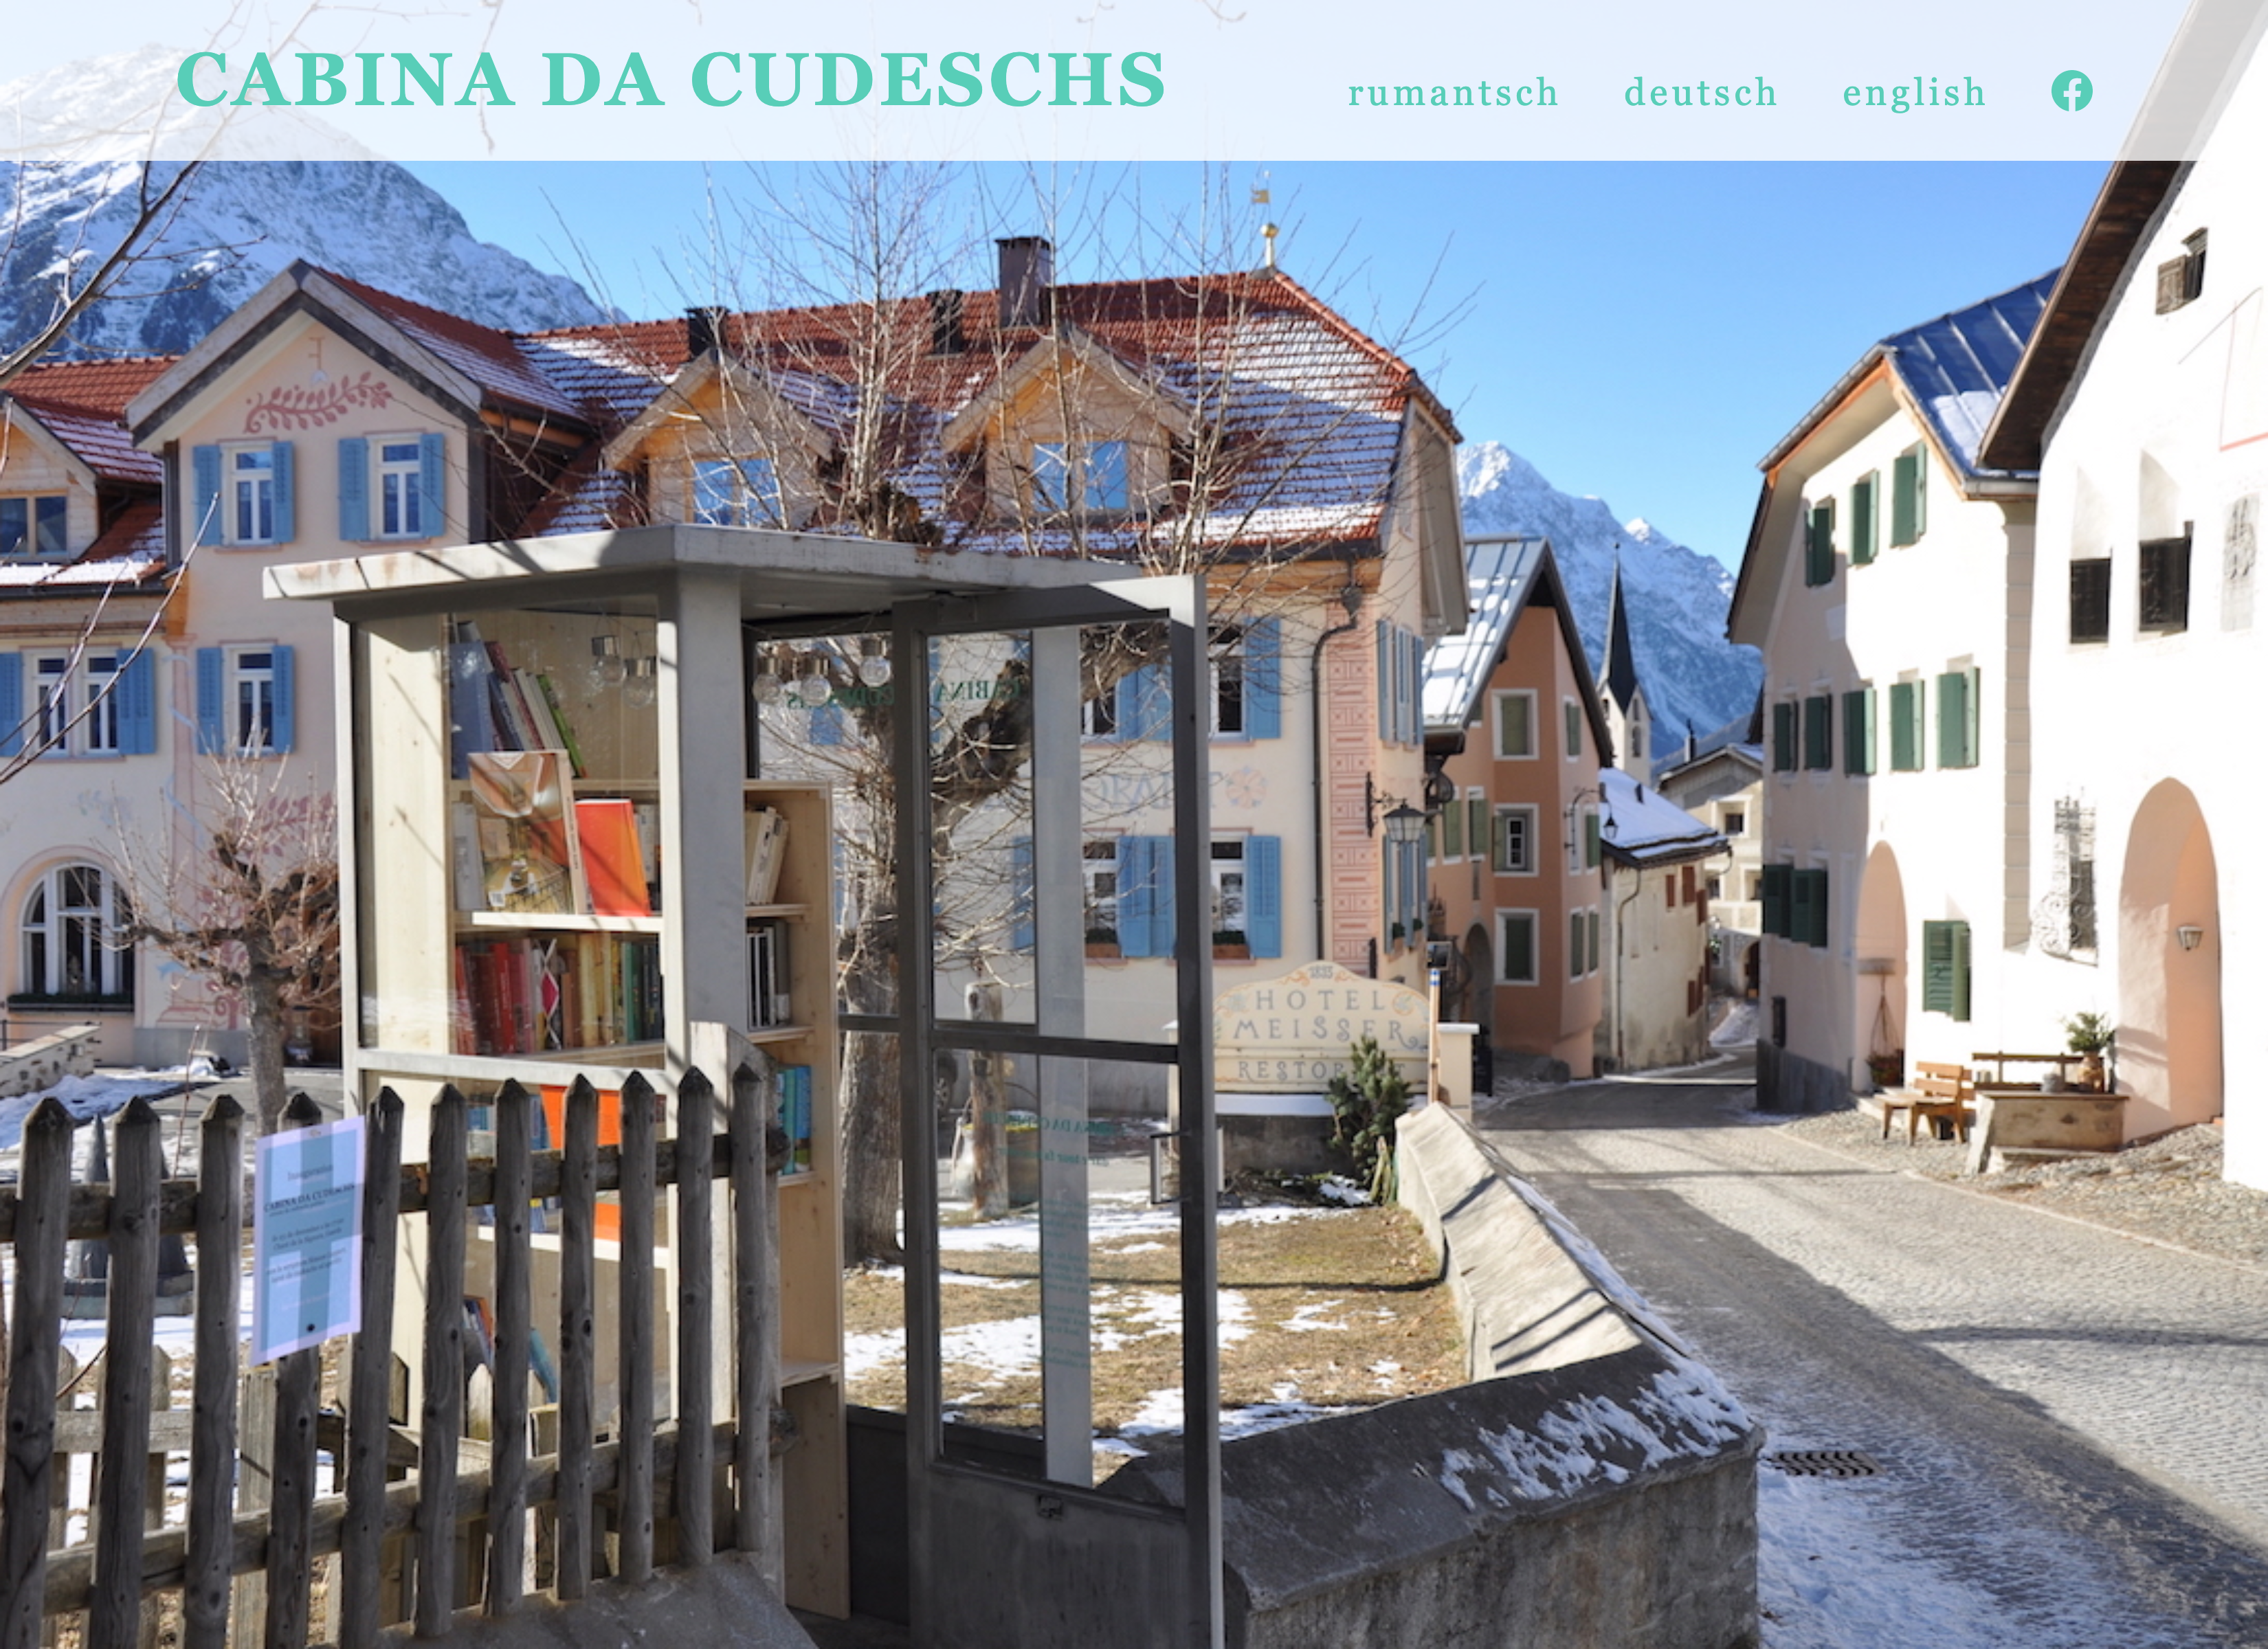 Screenshot of the 'Cabina da cudeschs' website